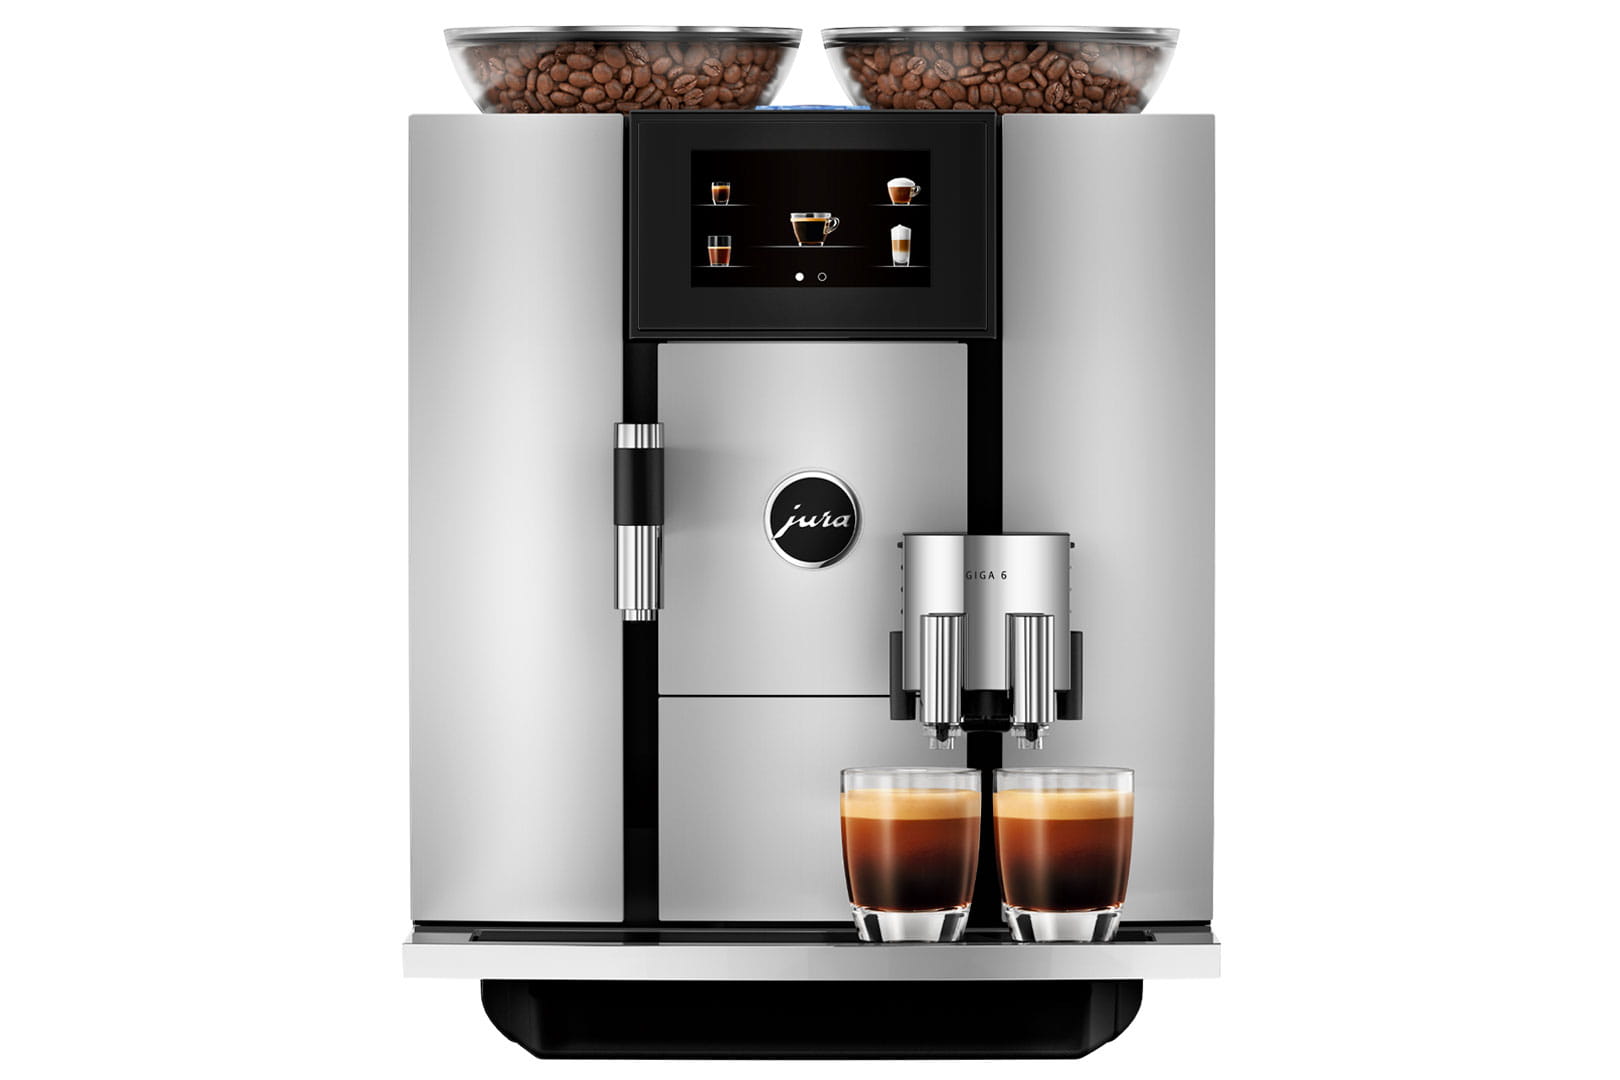 Jura Giga 6 Automatic Coffee Machine